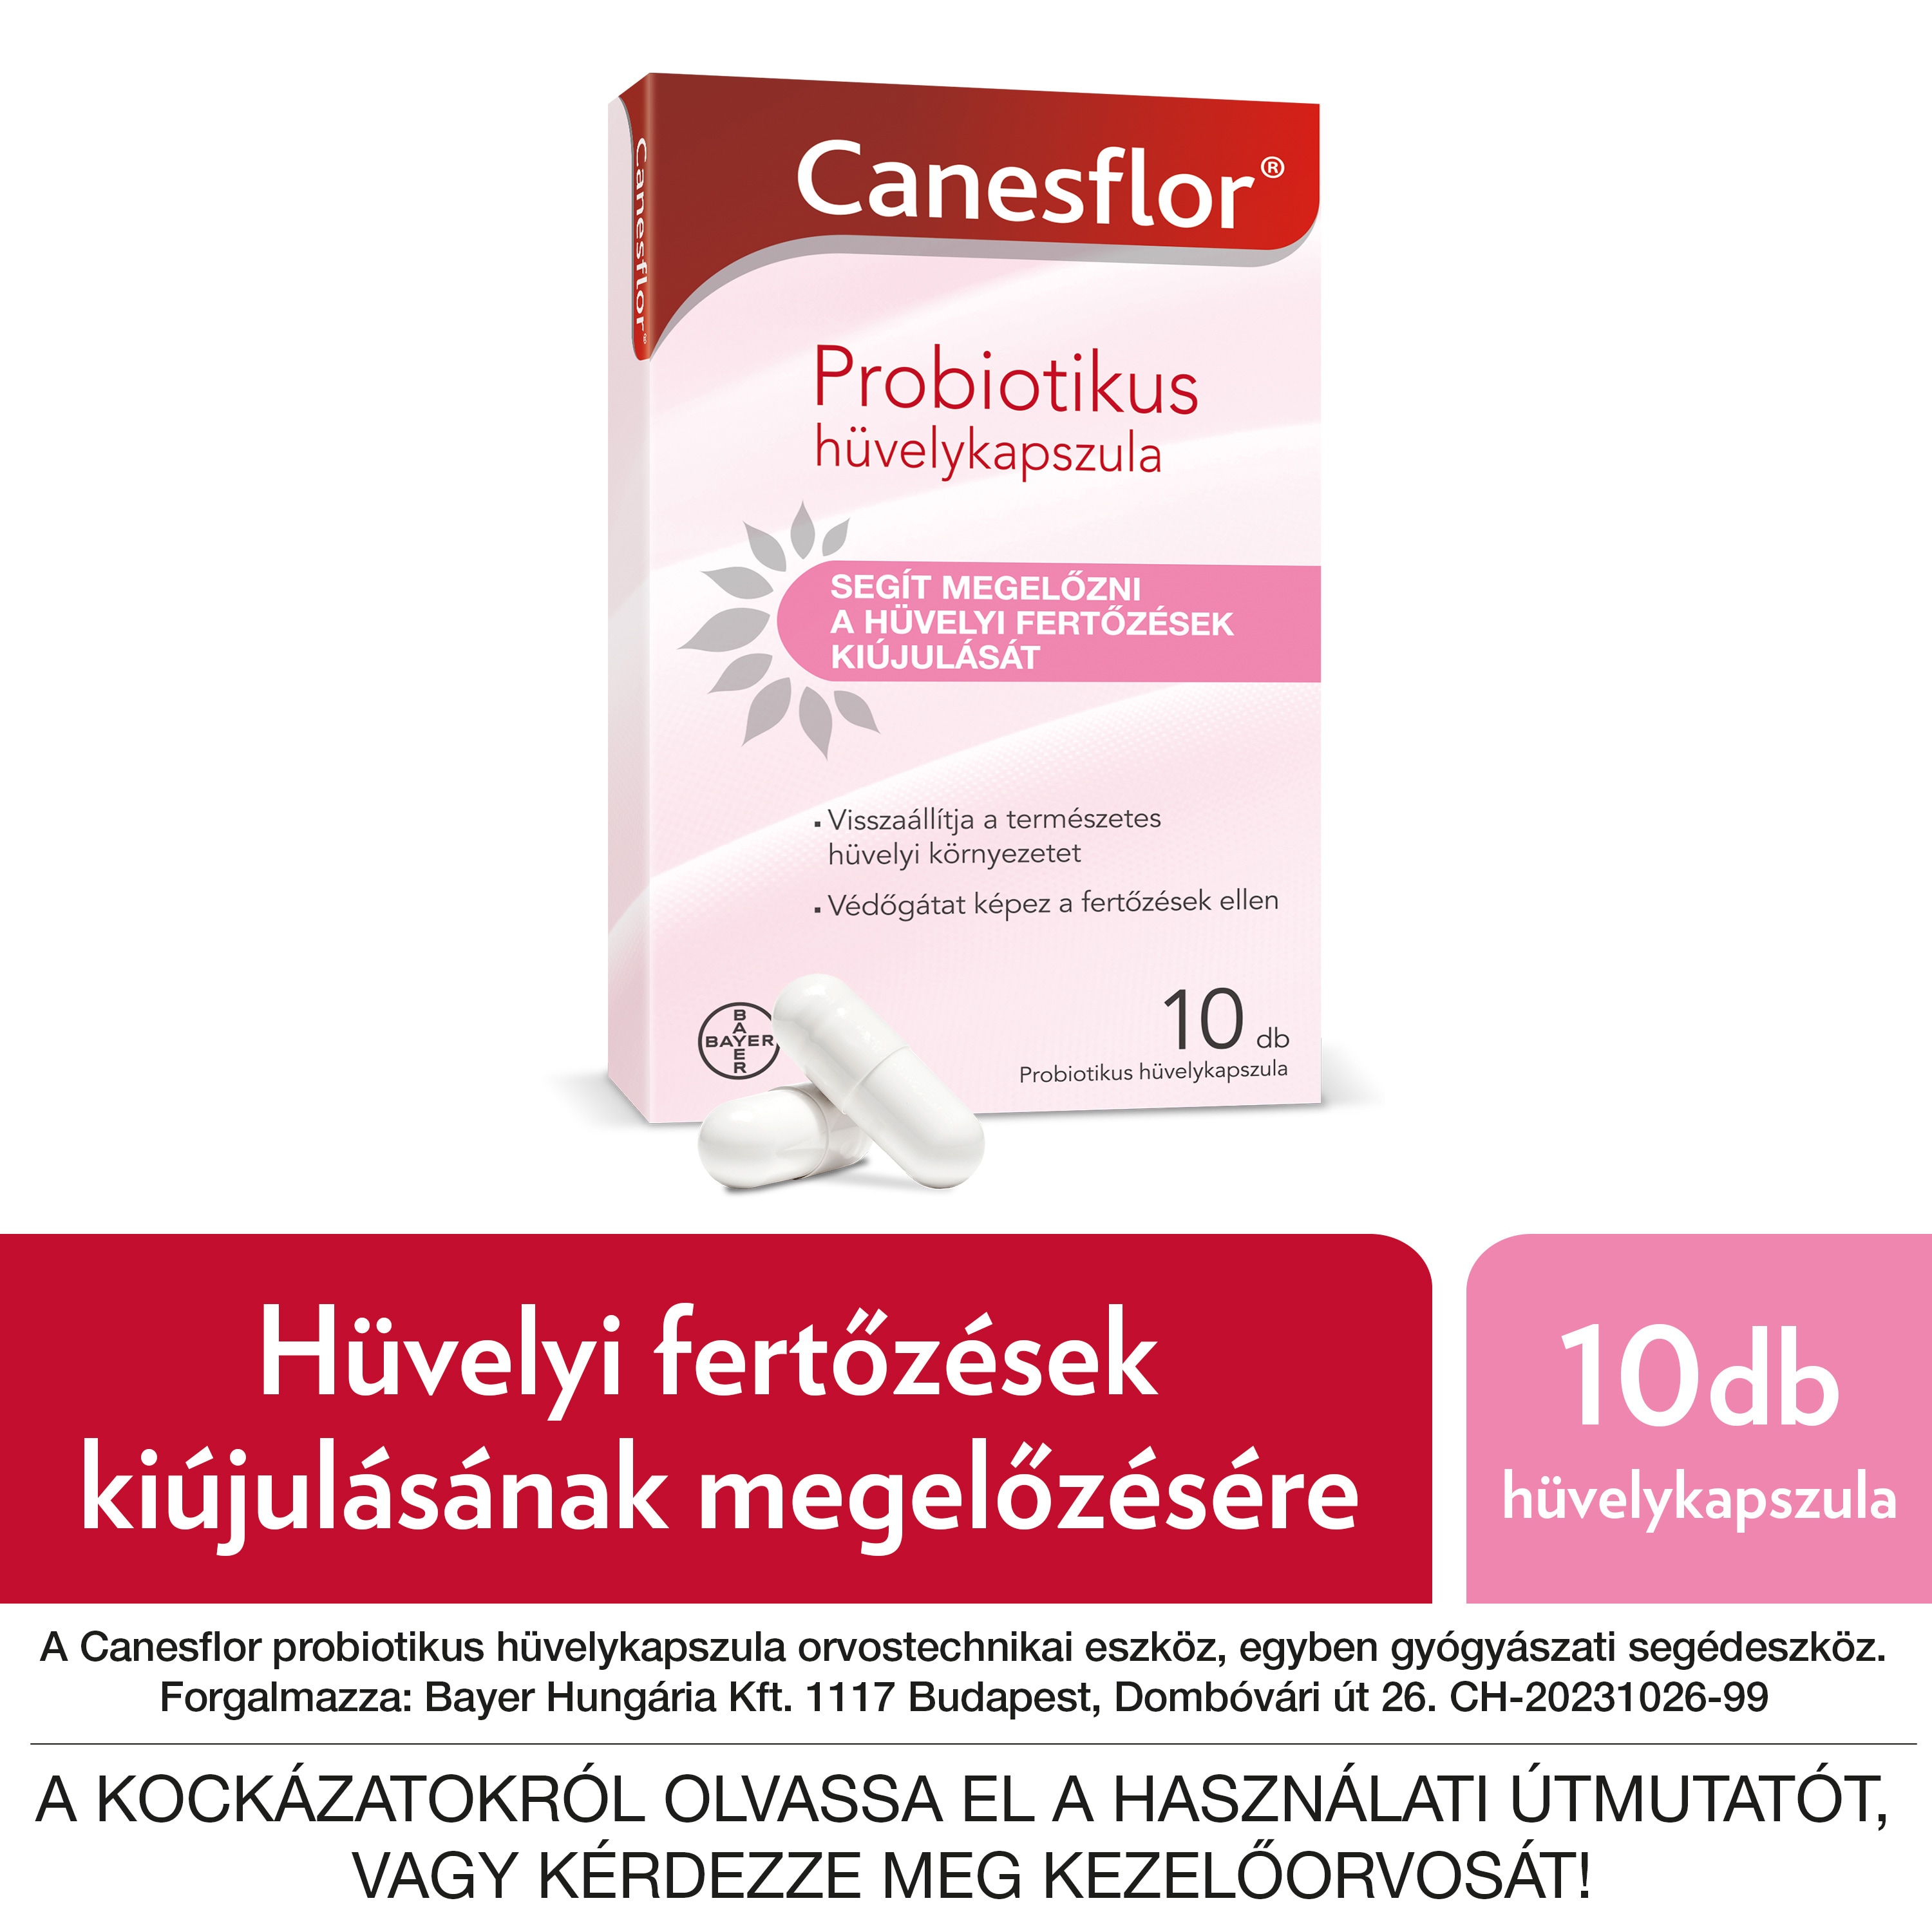 Canesflor probiotikus hüvelykapszula